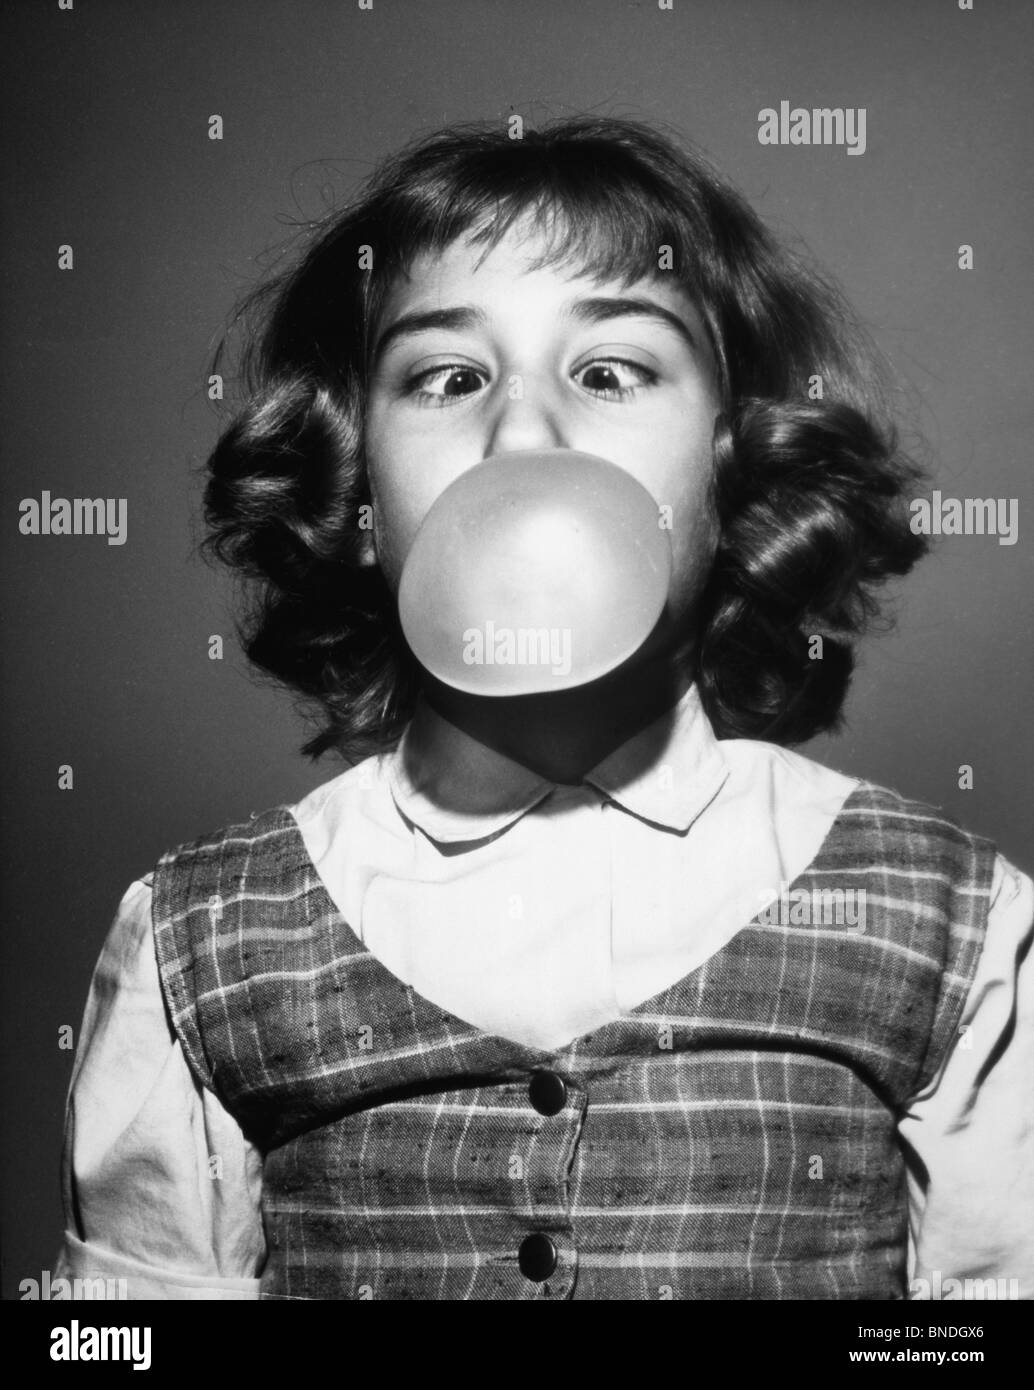 Gum close up Black and White Stock Photos & Images - Alamy